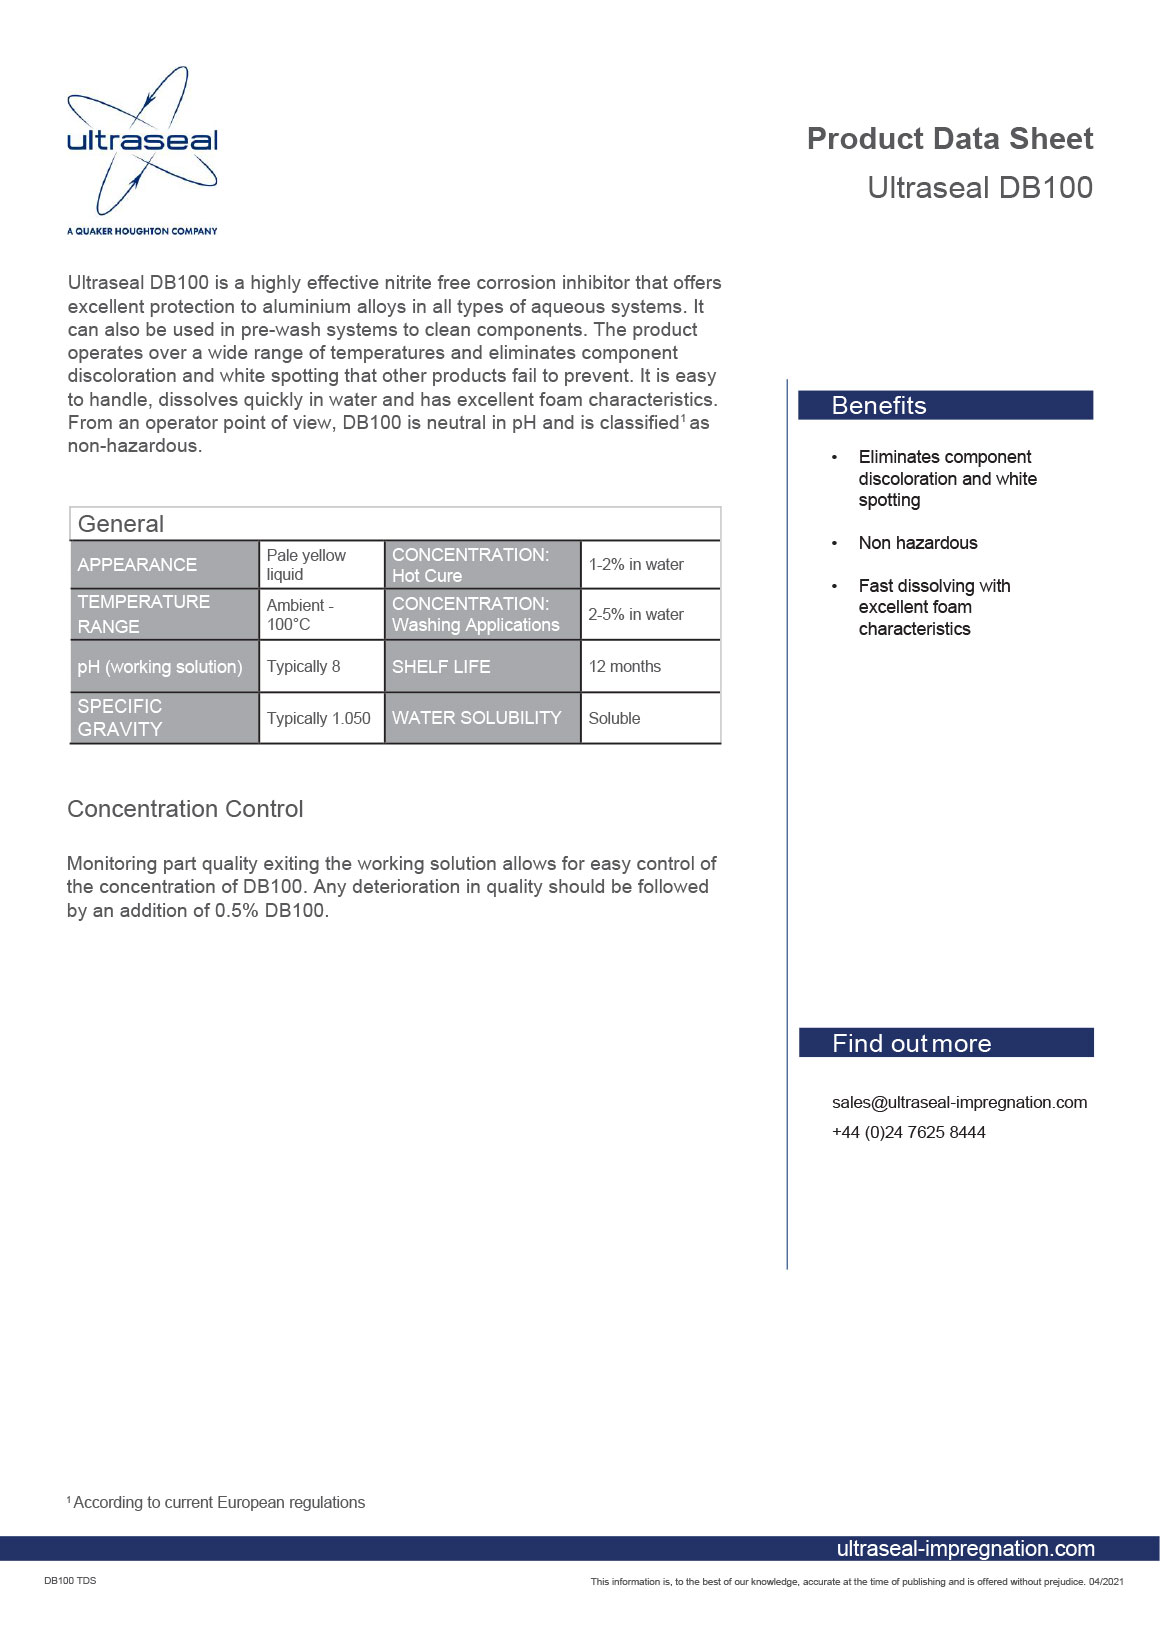 DB100 Data Sheet - whitepaper cover